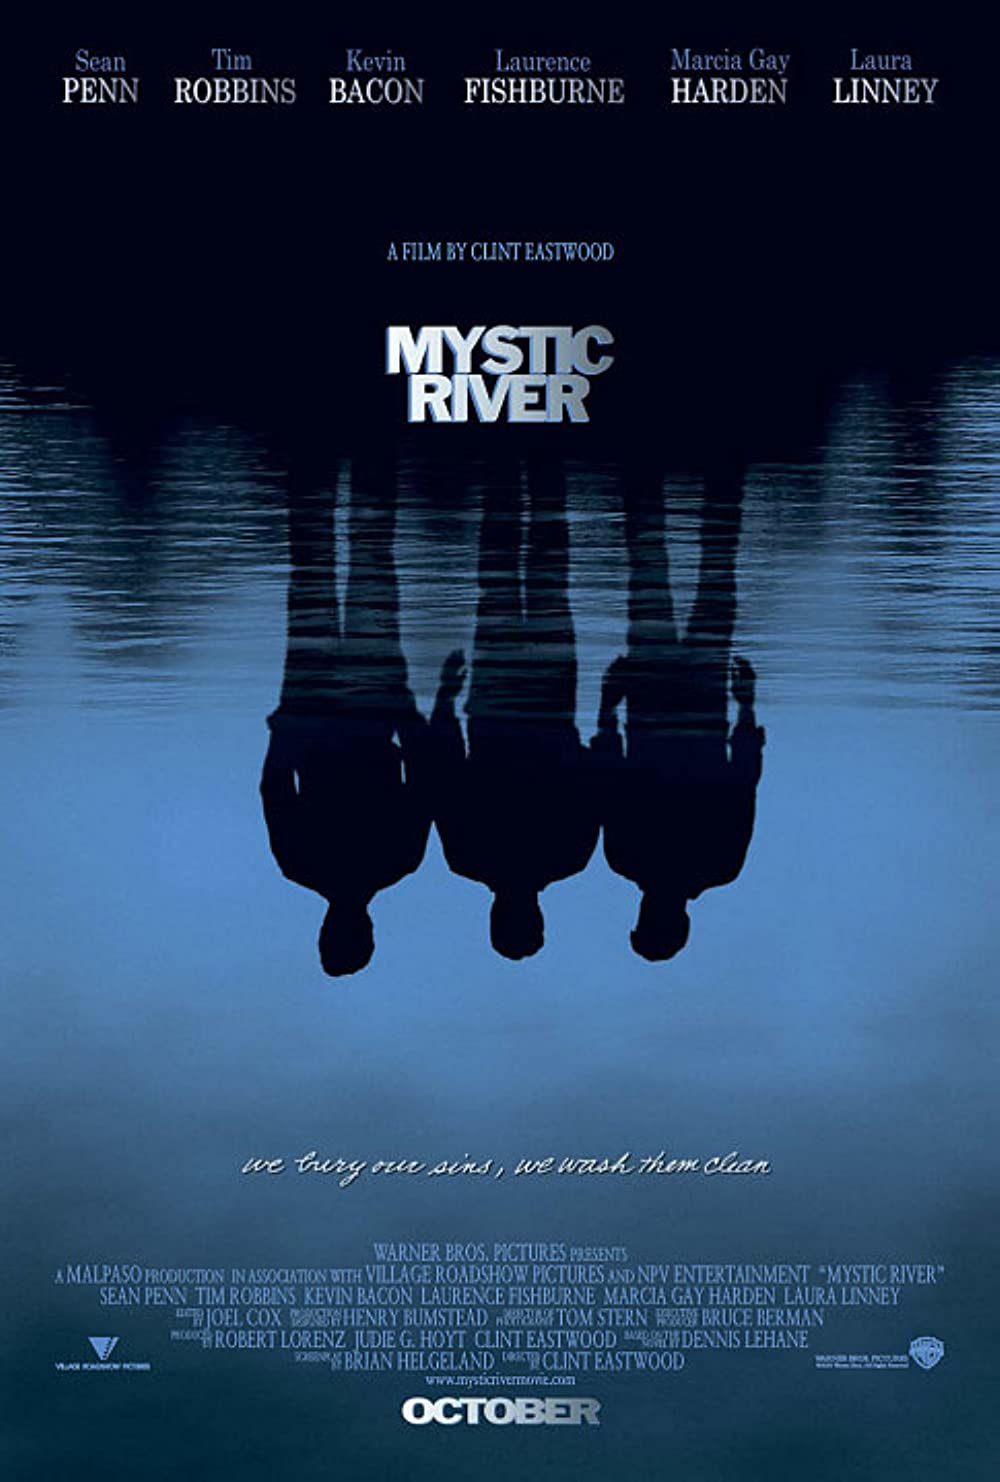 Filmbeschreibung zu Mystic River